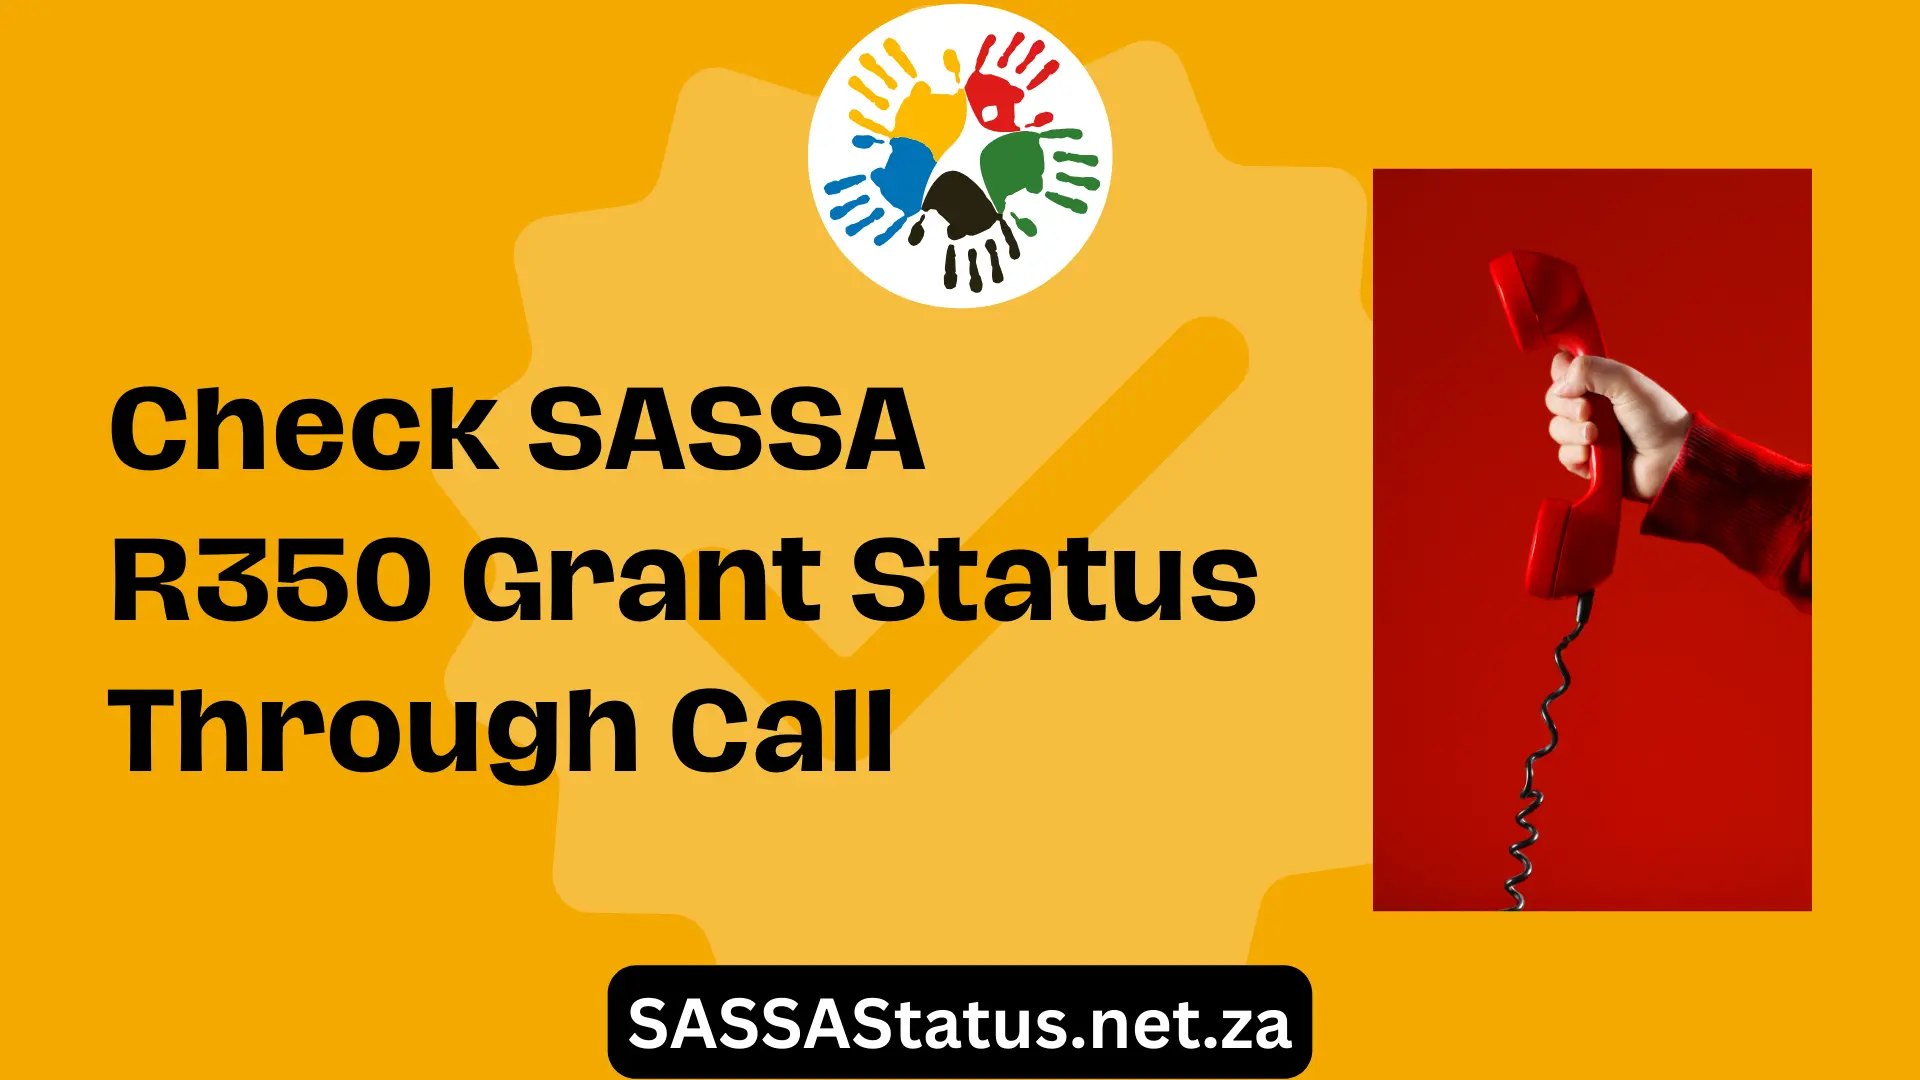 Check SASSA R350 Grant Status Through Call